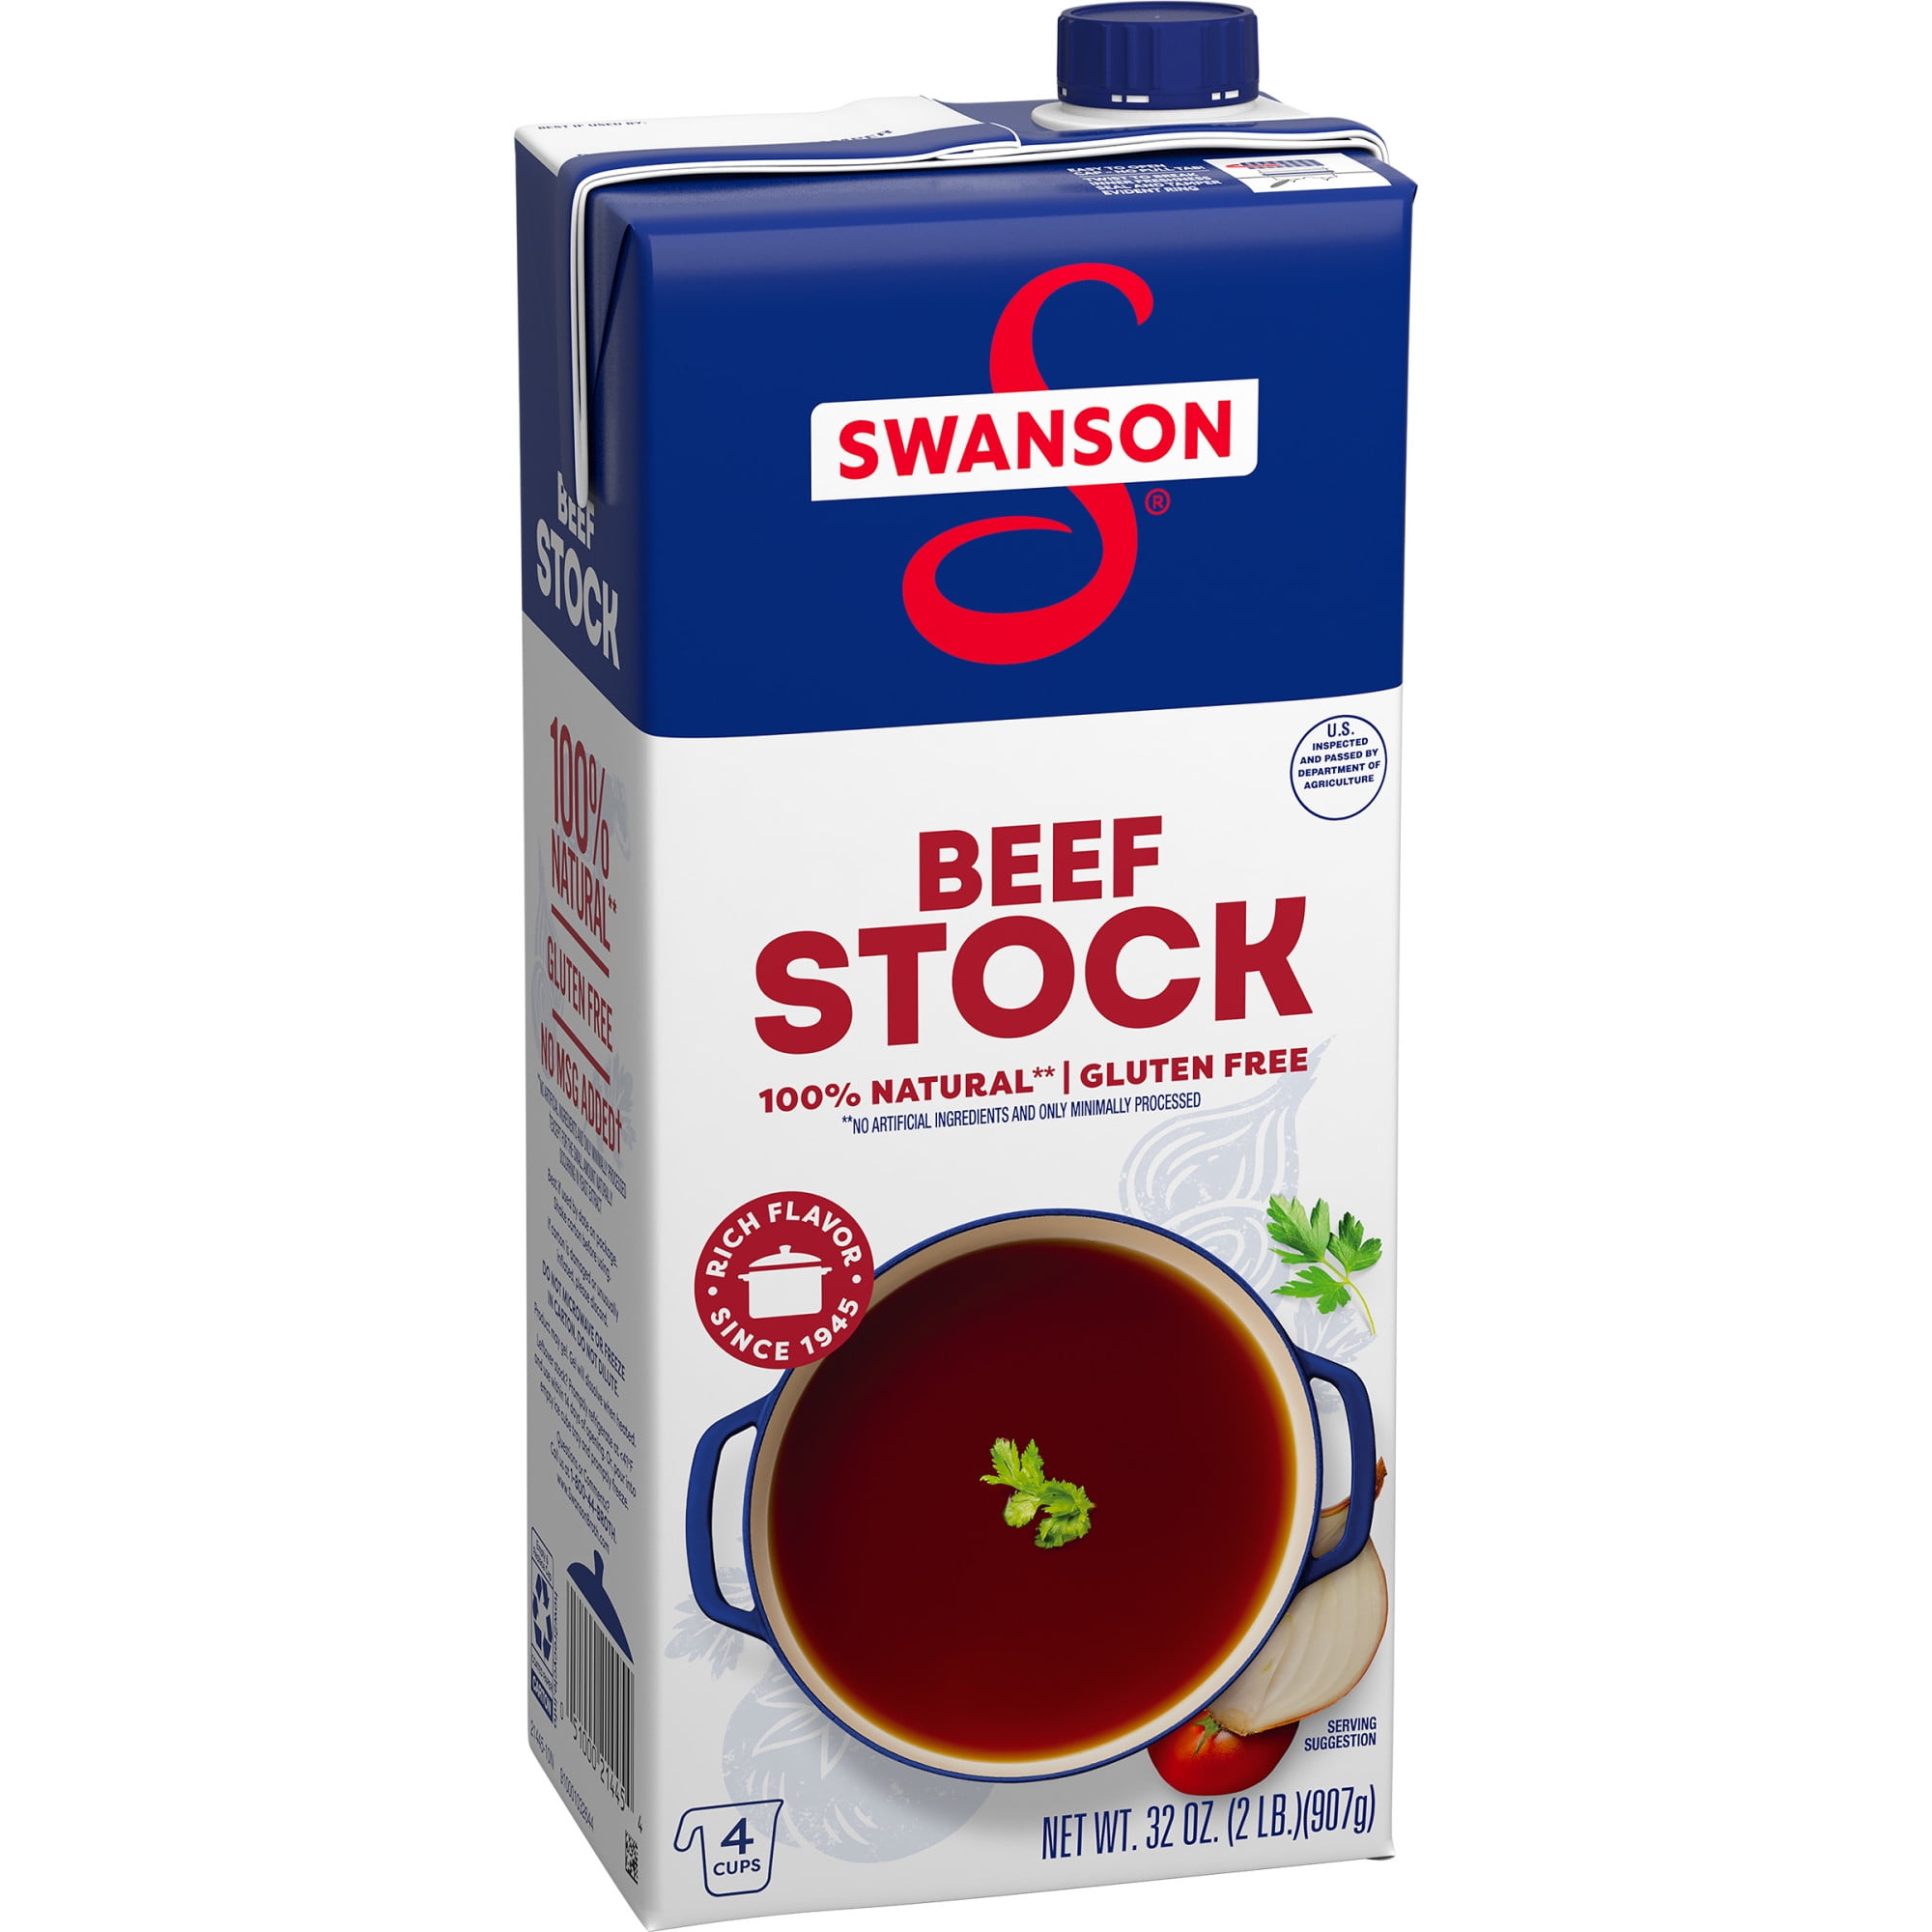 Swanson 100% Natural, Gluten-Free Beef Stock, 32 Oz Carton